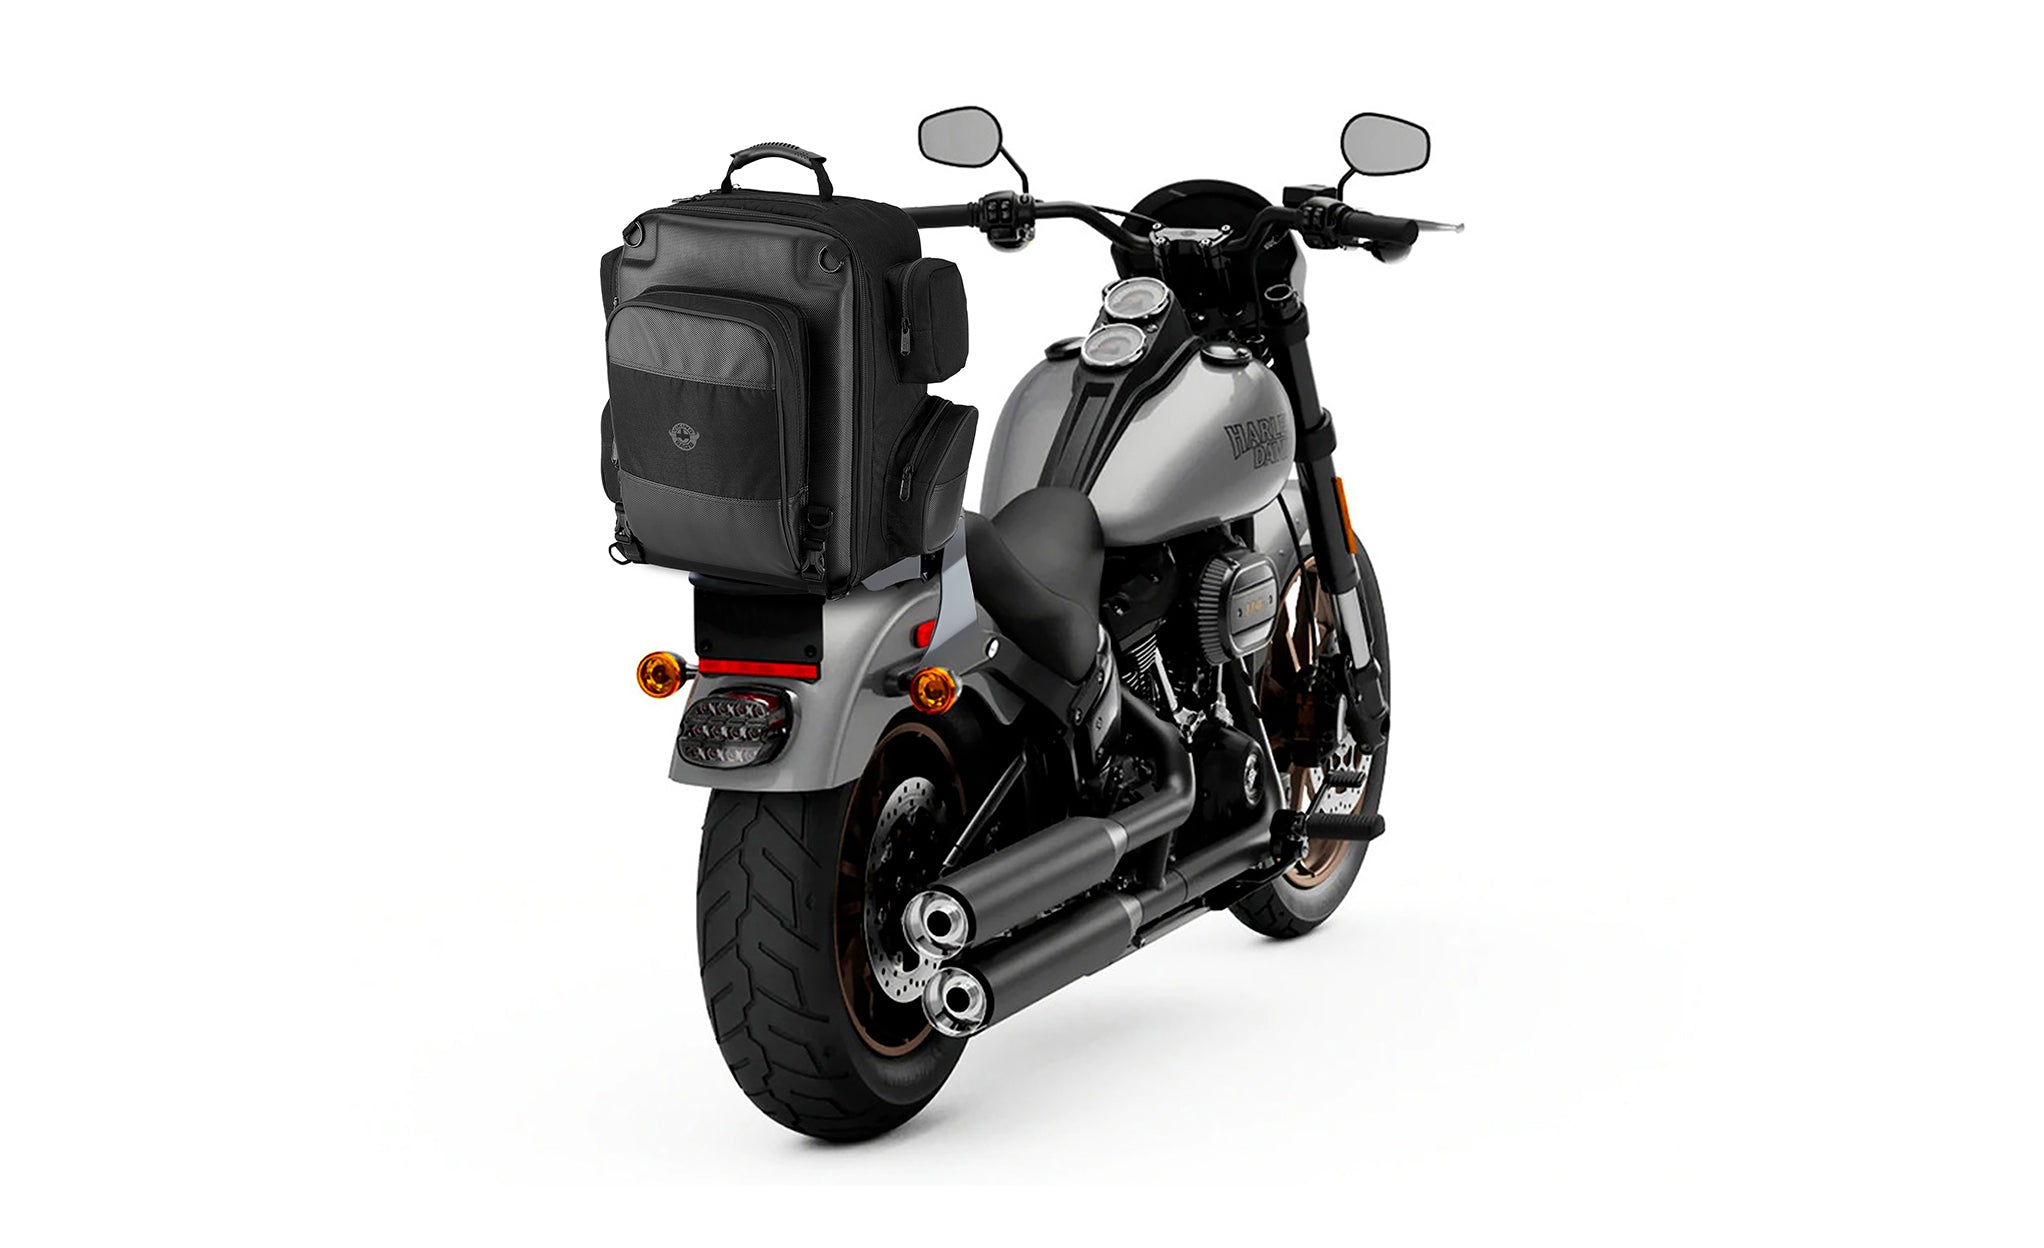 Viking Voyage Large Motorcycle Sissy Bar Backpack for Harley Davidson Bag on Bike View @expand